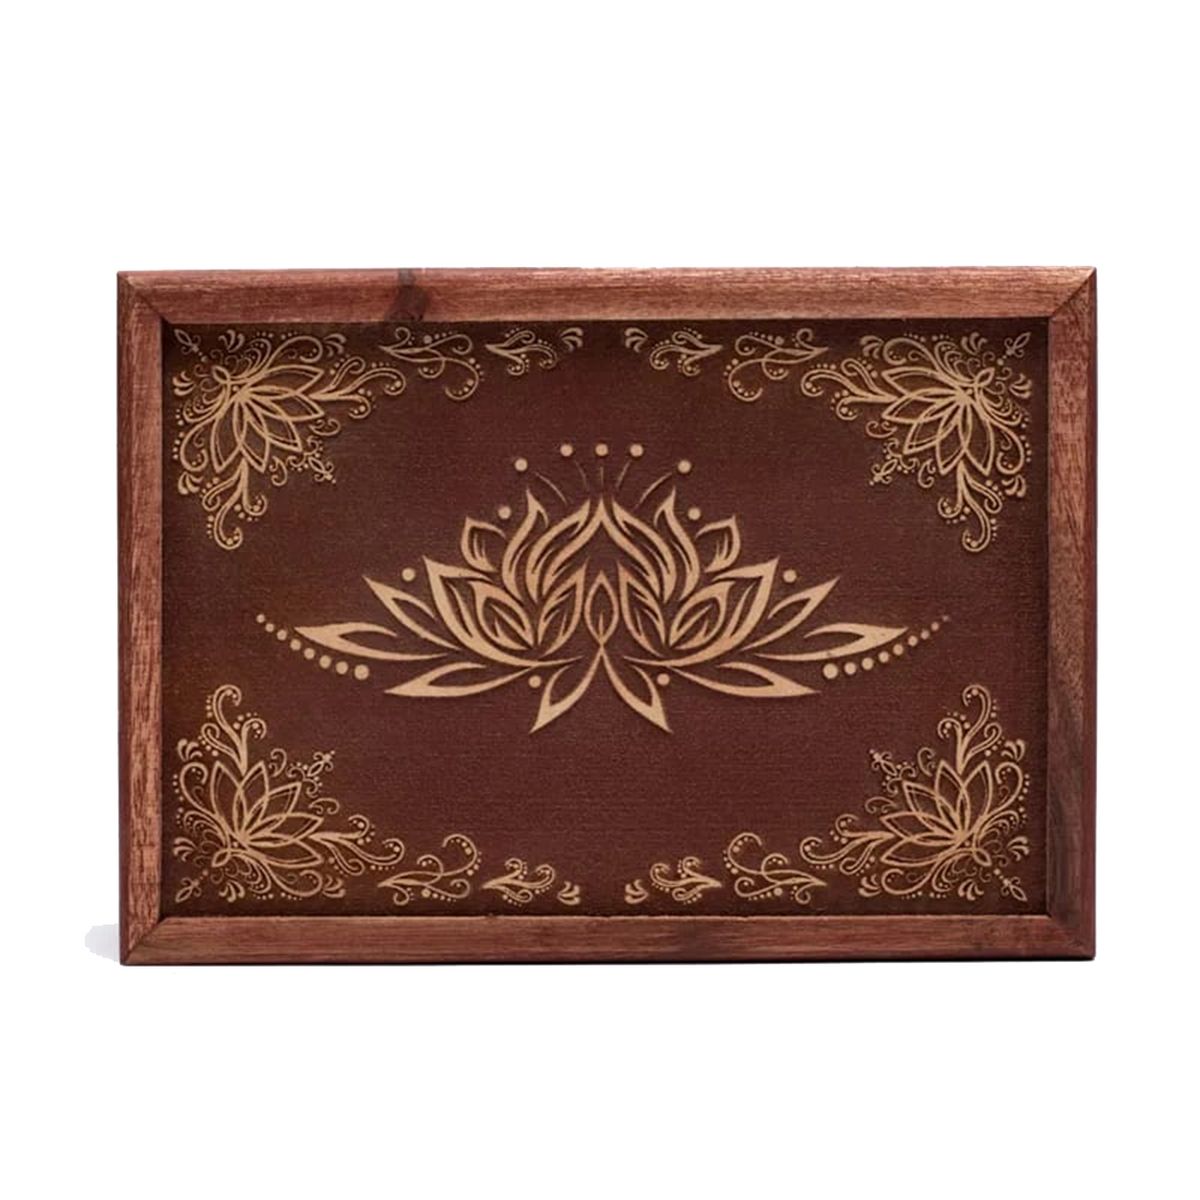 Tarot box lotus wood